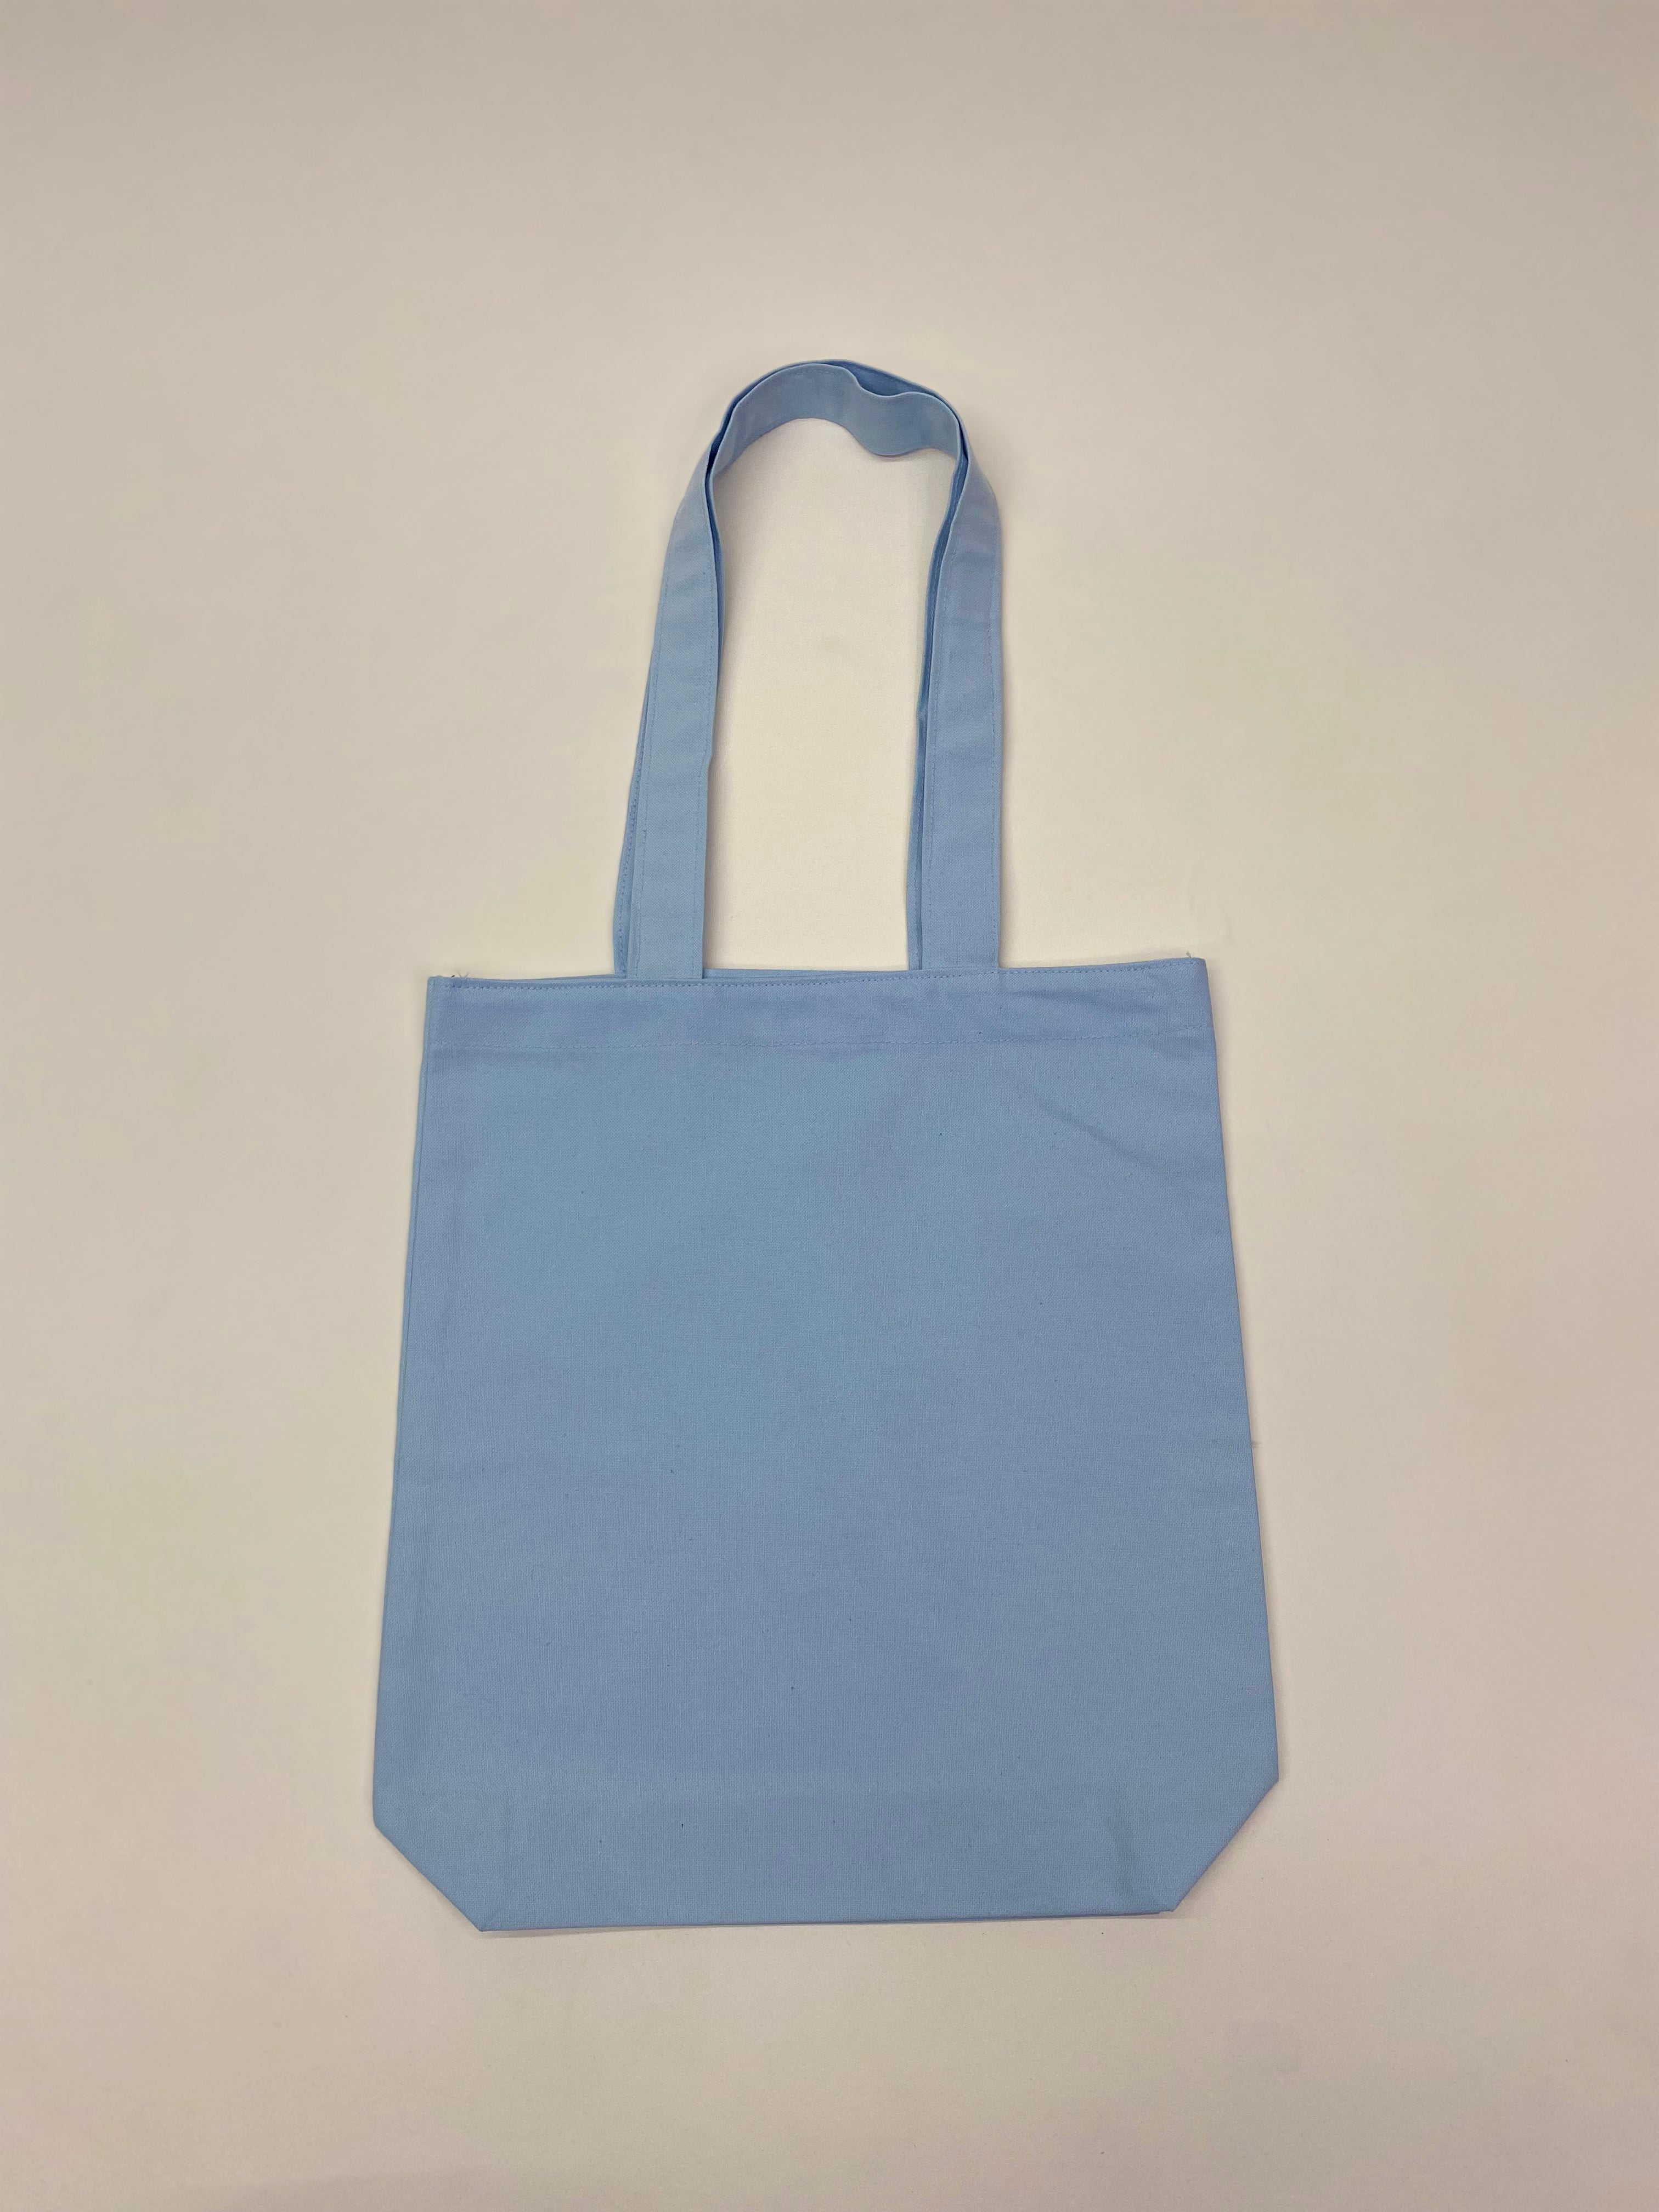 Girl power - tote bag